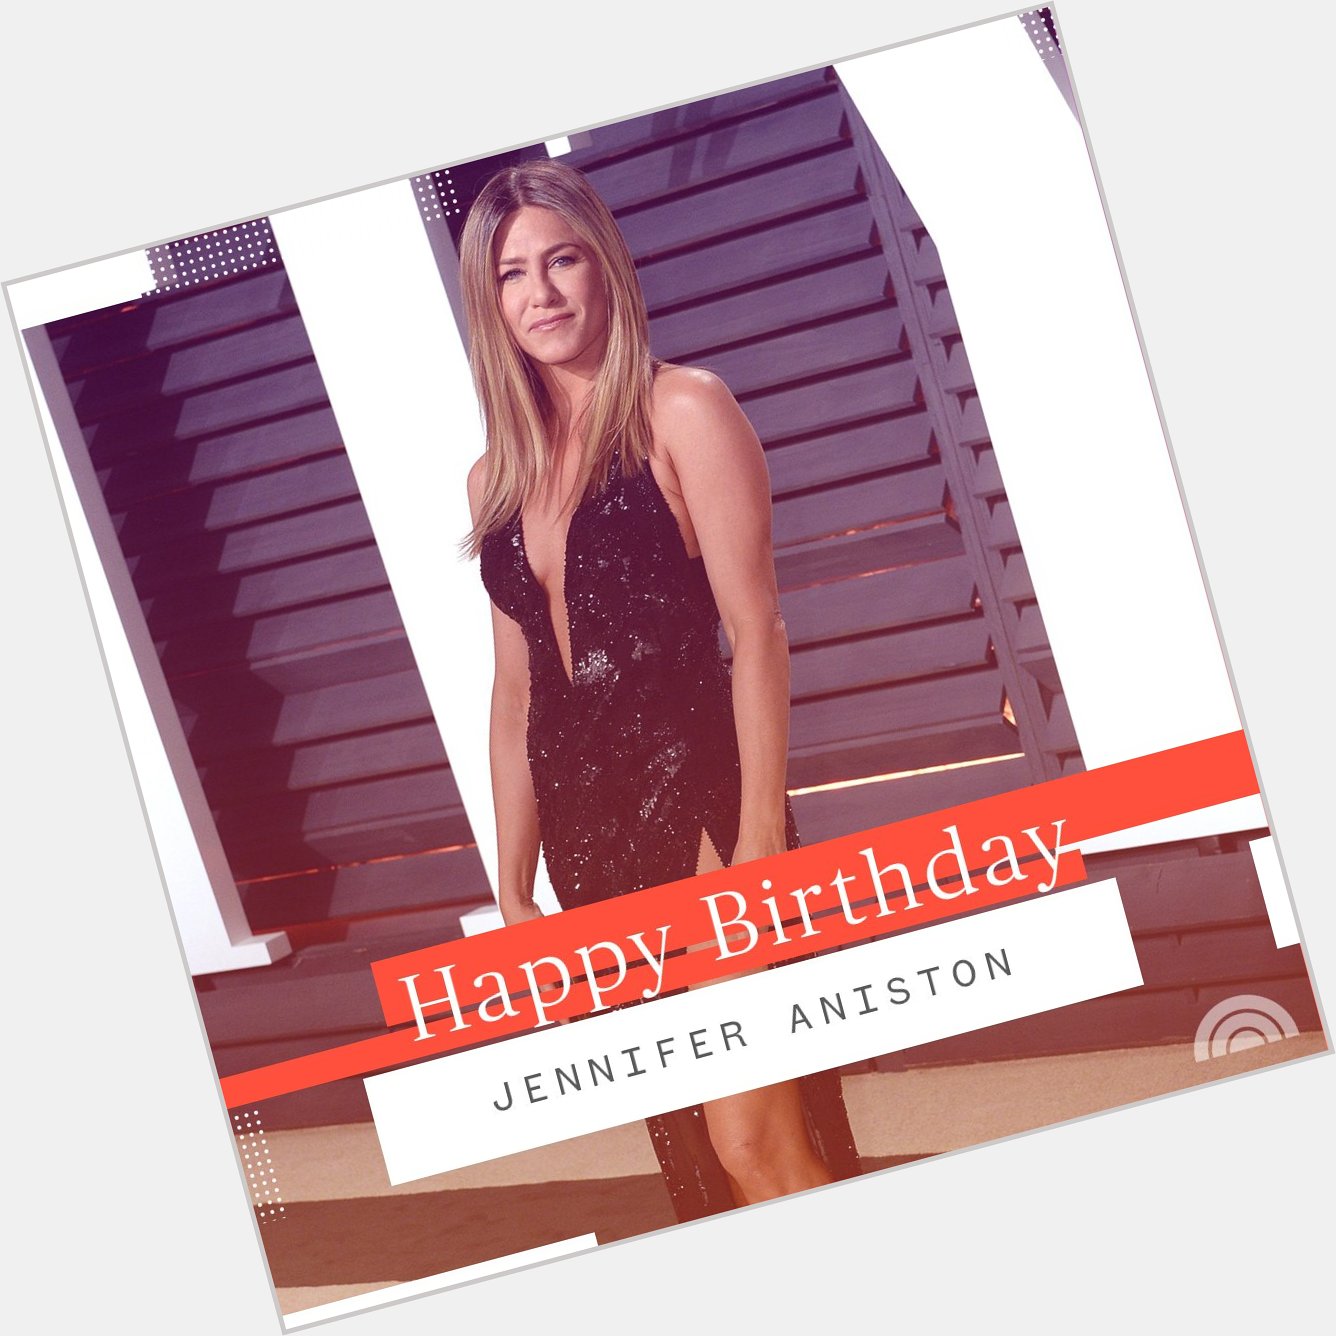 50 has never looked better! Happy birthday, Jennifer Aniston. 